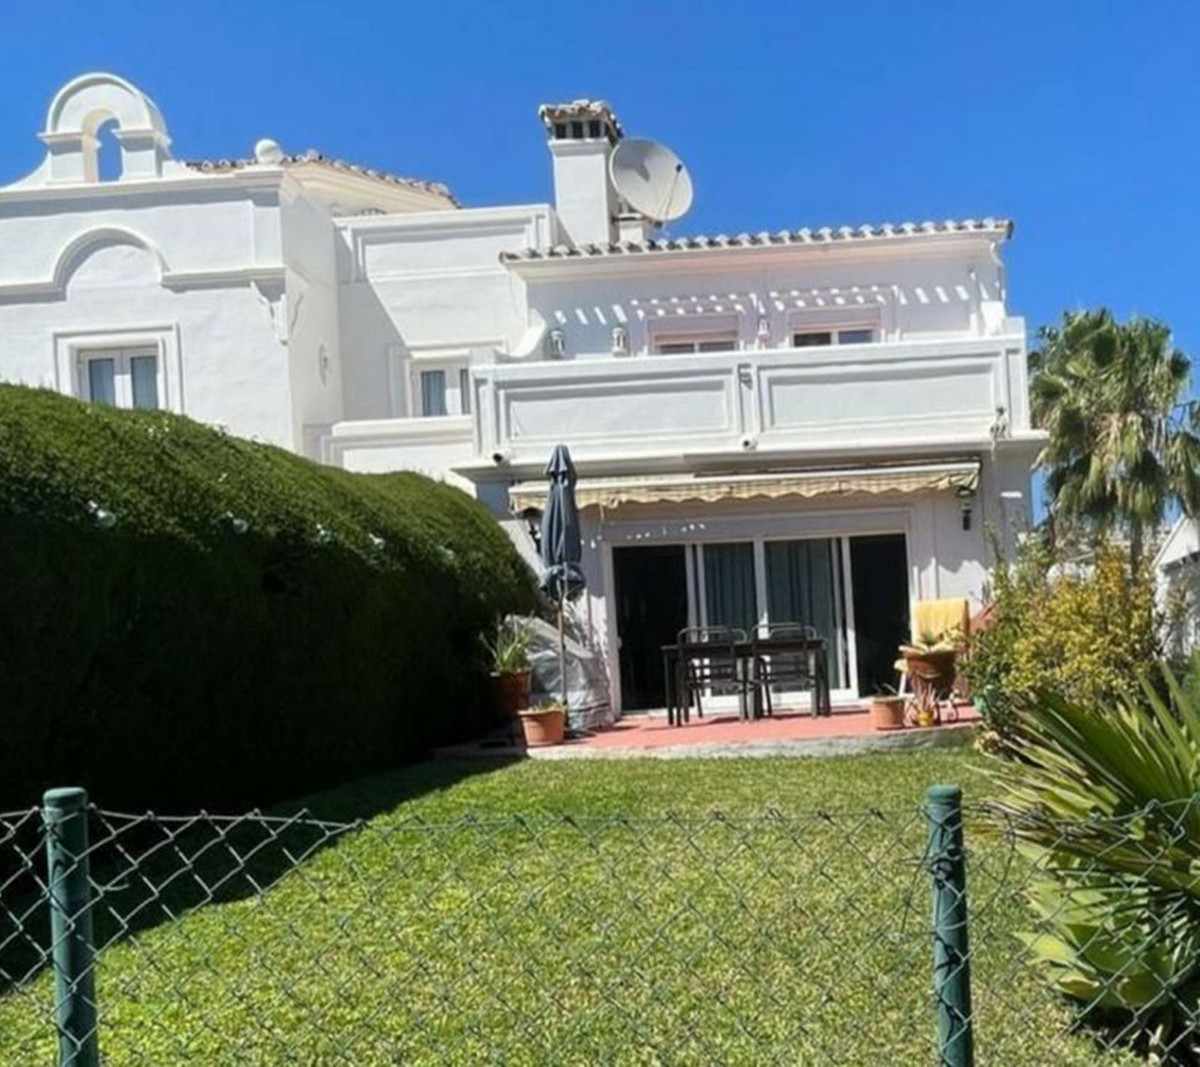 						Villa  Semi Detached
													for sale 
																			 in Calahonda
					